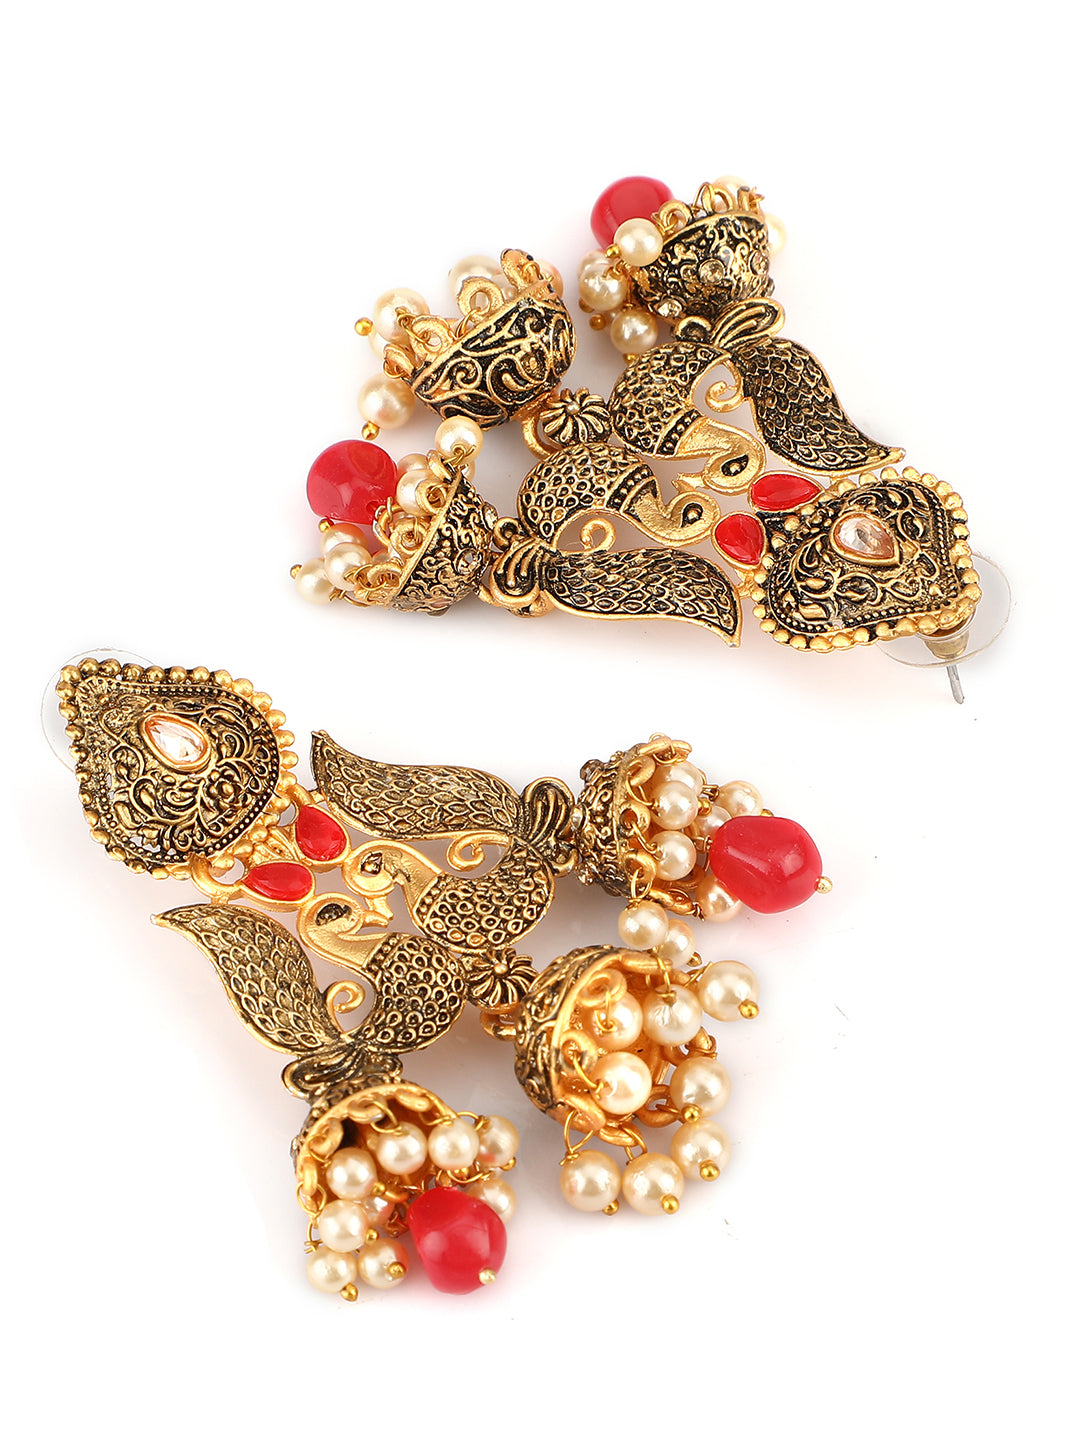 Bhagya Lakshmi Gold Plated Earrings - Buy earrings online from Bhagya Lakshmi